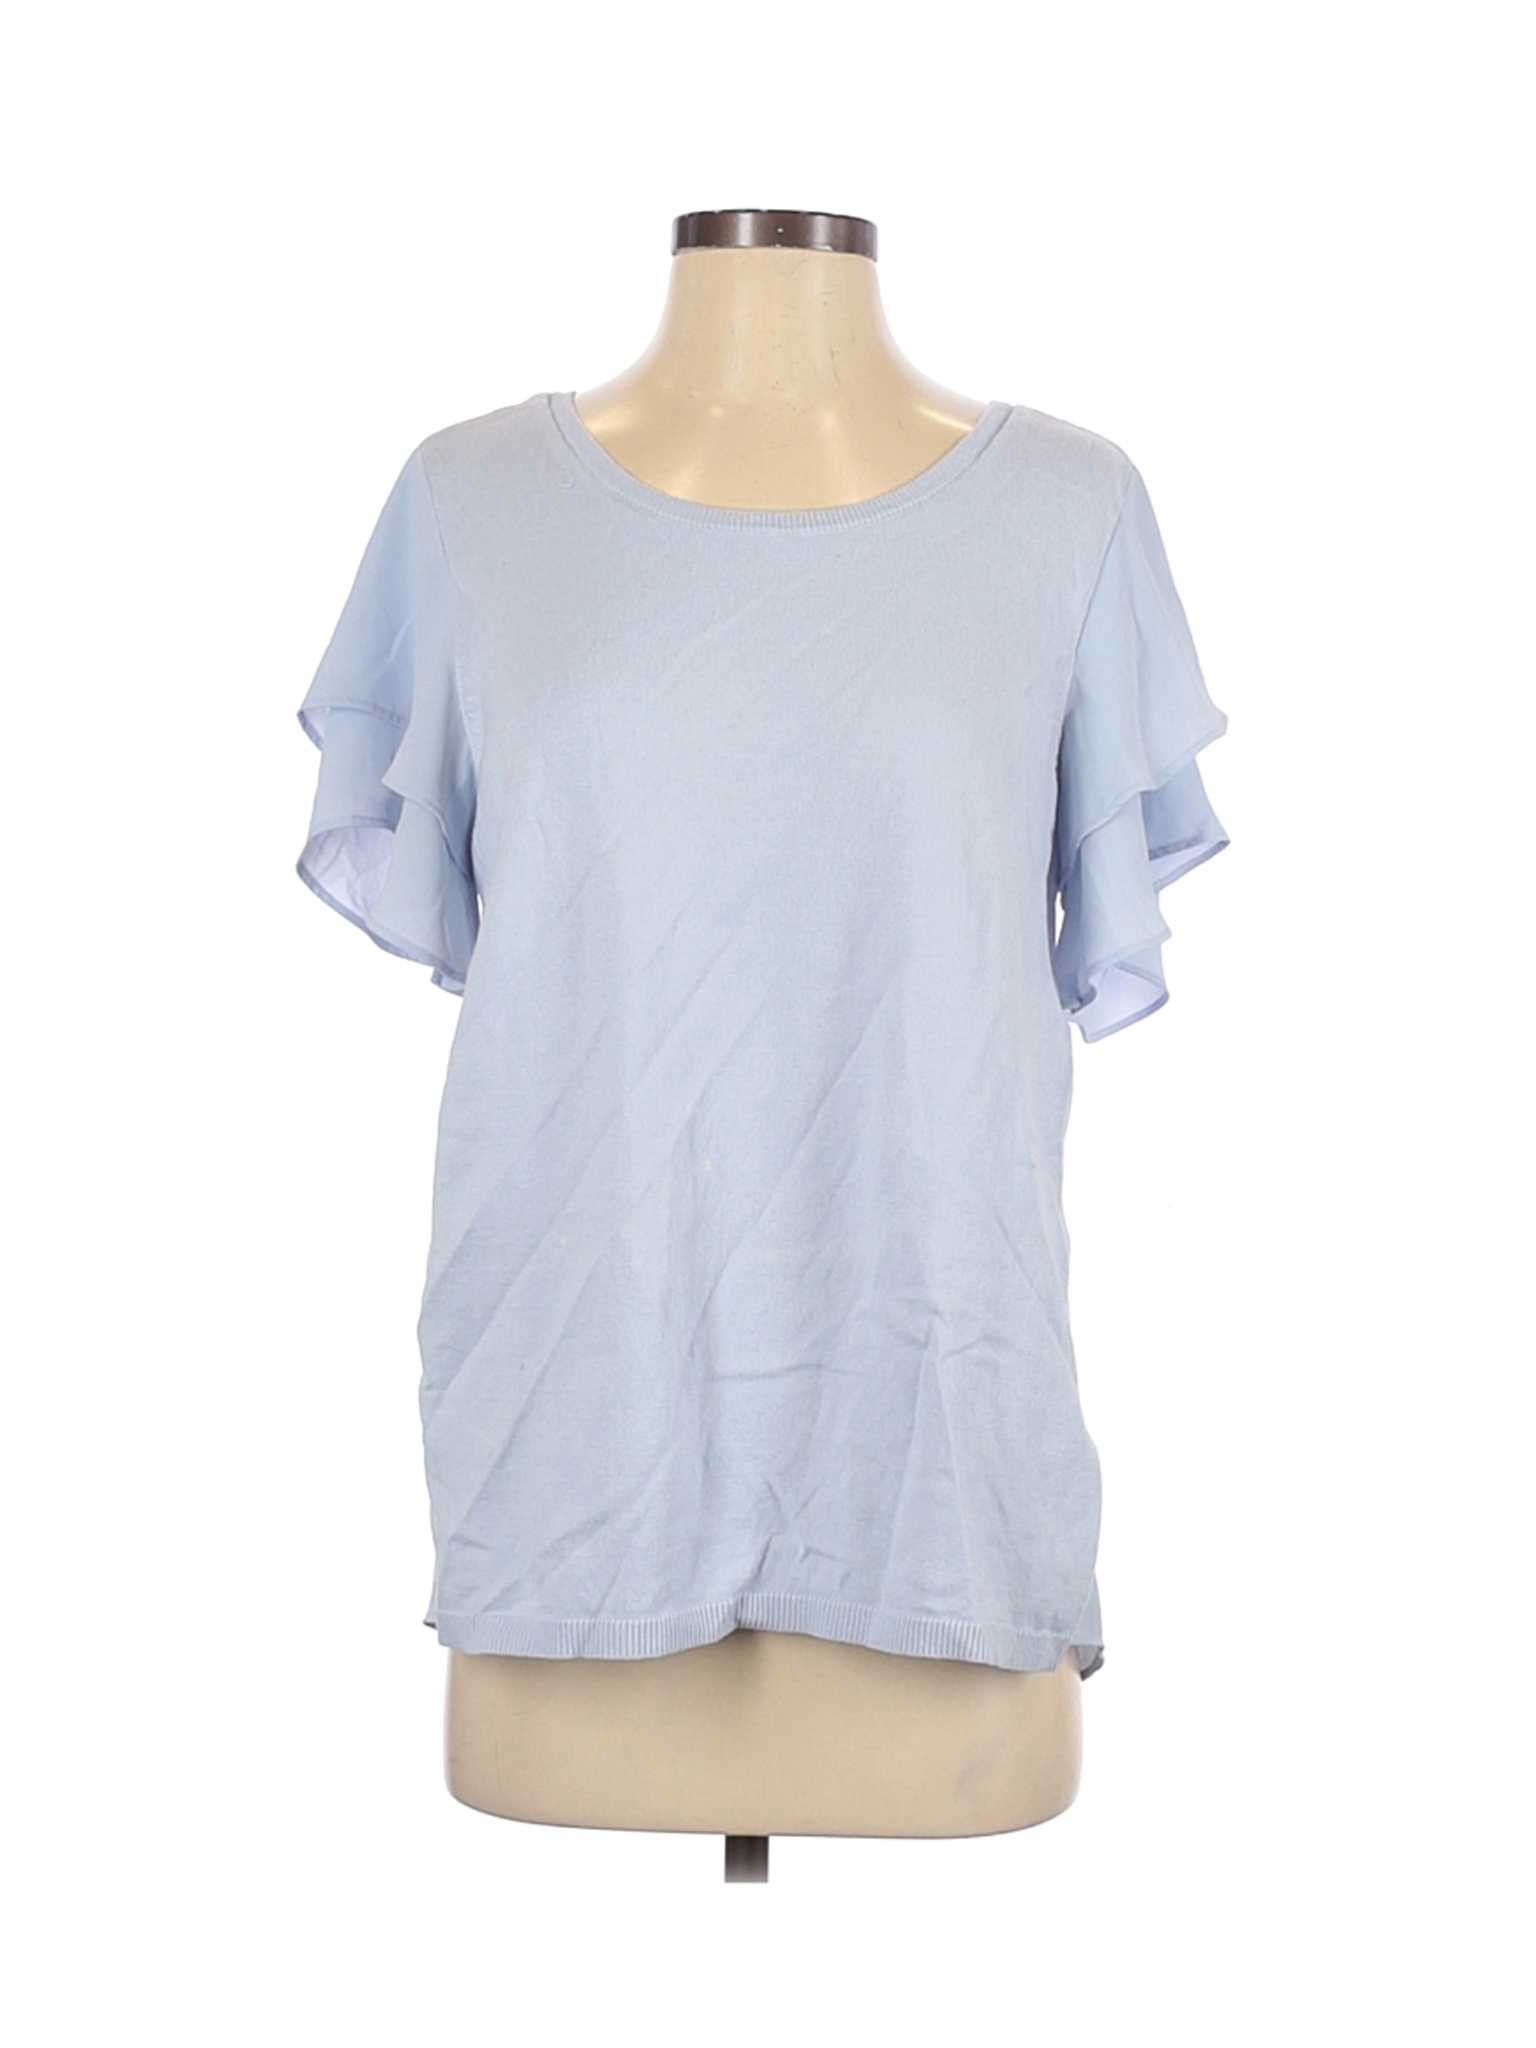 Ann Taylor LOFT Women Blue Short Sleeve Top S | eBay